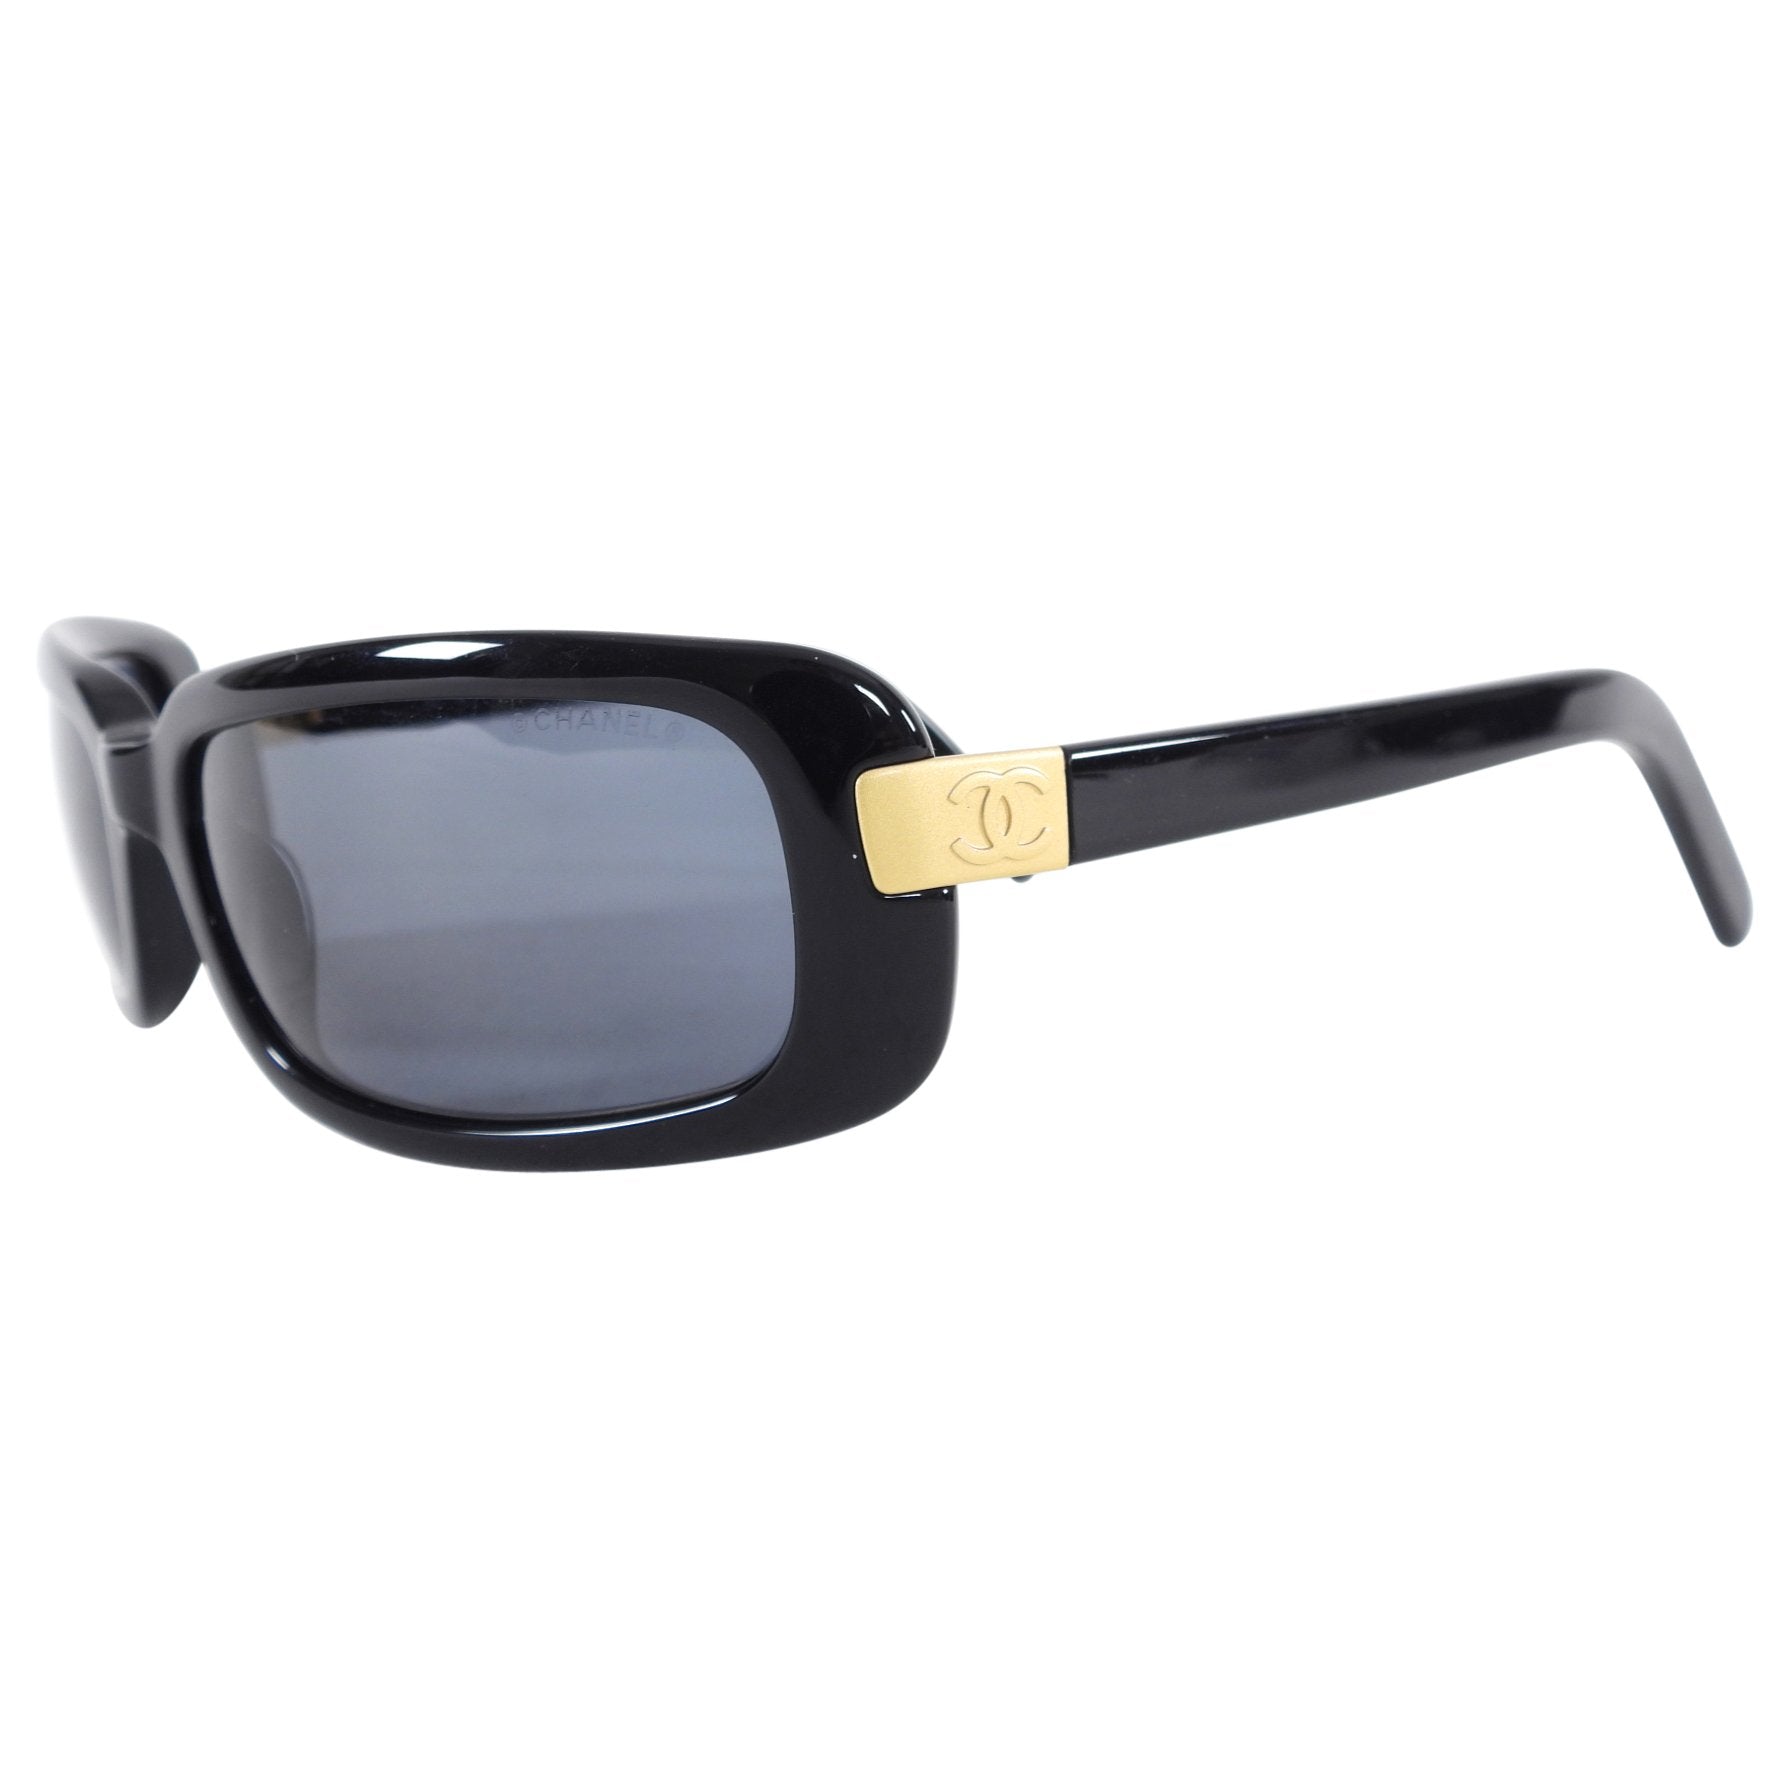 BRAND NEW!!! Chanel 5099 Sunglasses (Grey/Brown Moss Green)